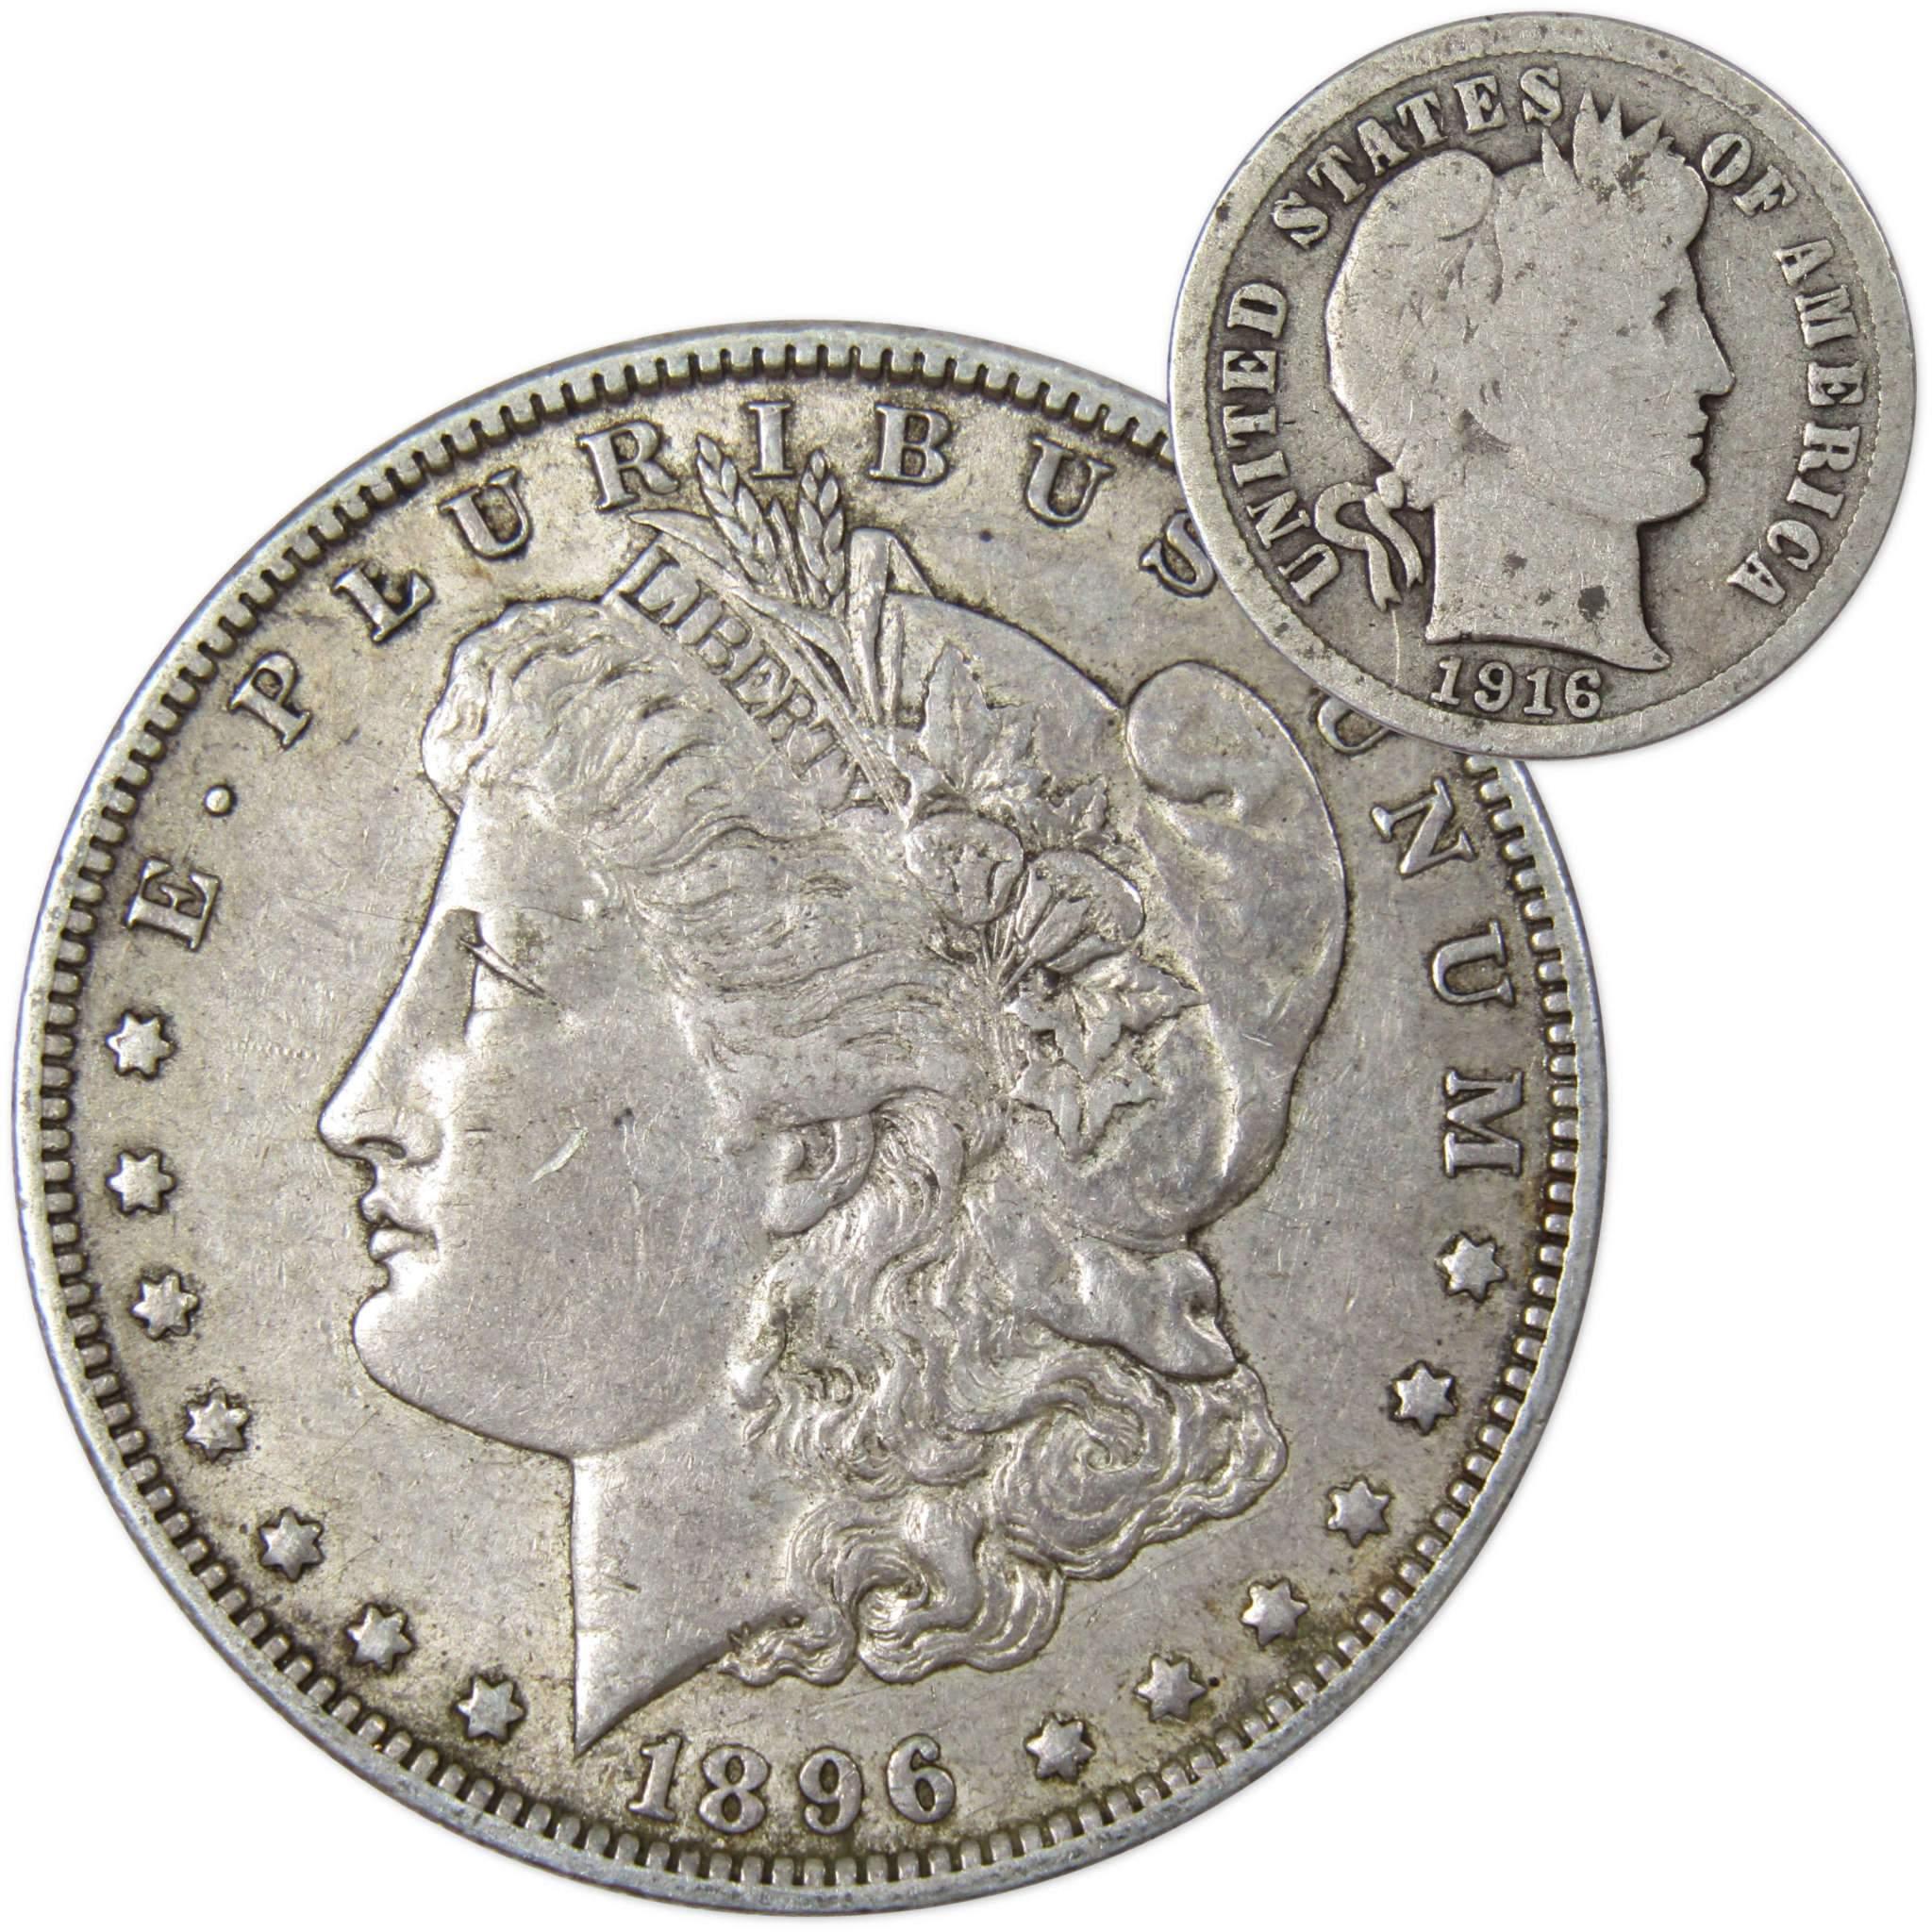 1896 O Morgan Dollar XF EF Extremely Fine with 1916 Barber Dime G Good - Morgan coin - Morgan silver dollar - Morgan silver dollar for sale - Profile Coins &amp; Collectibles